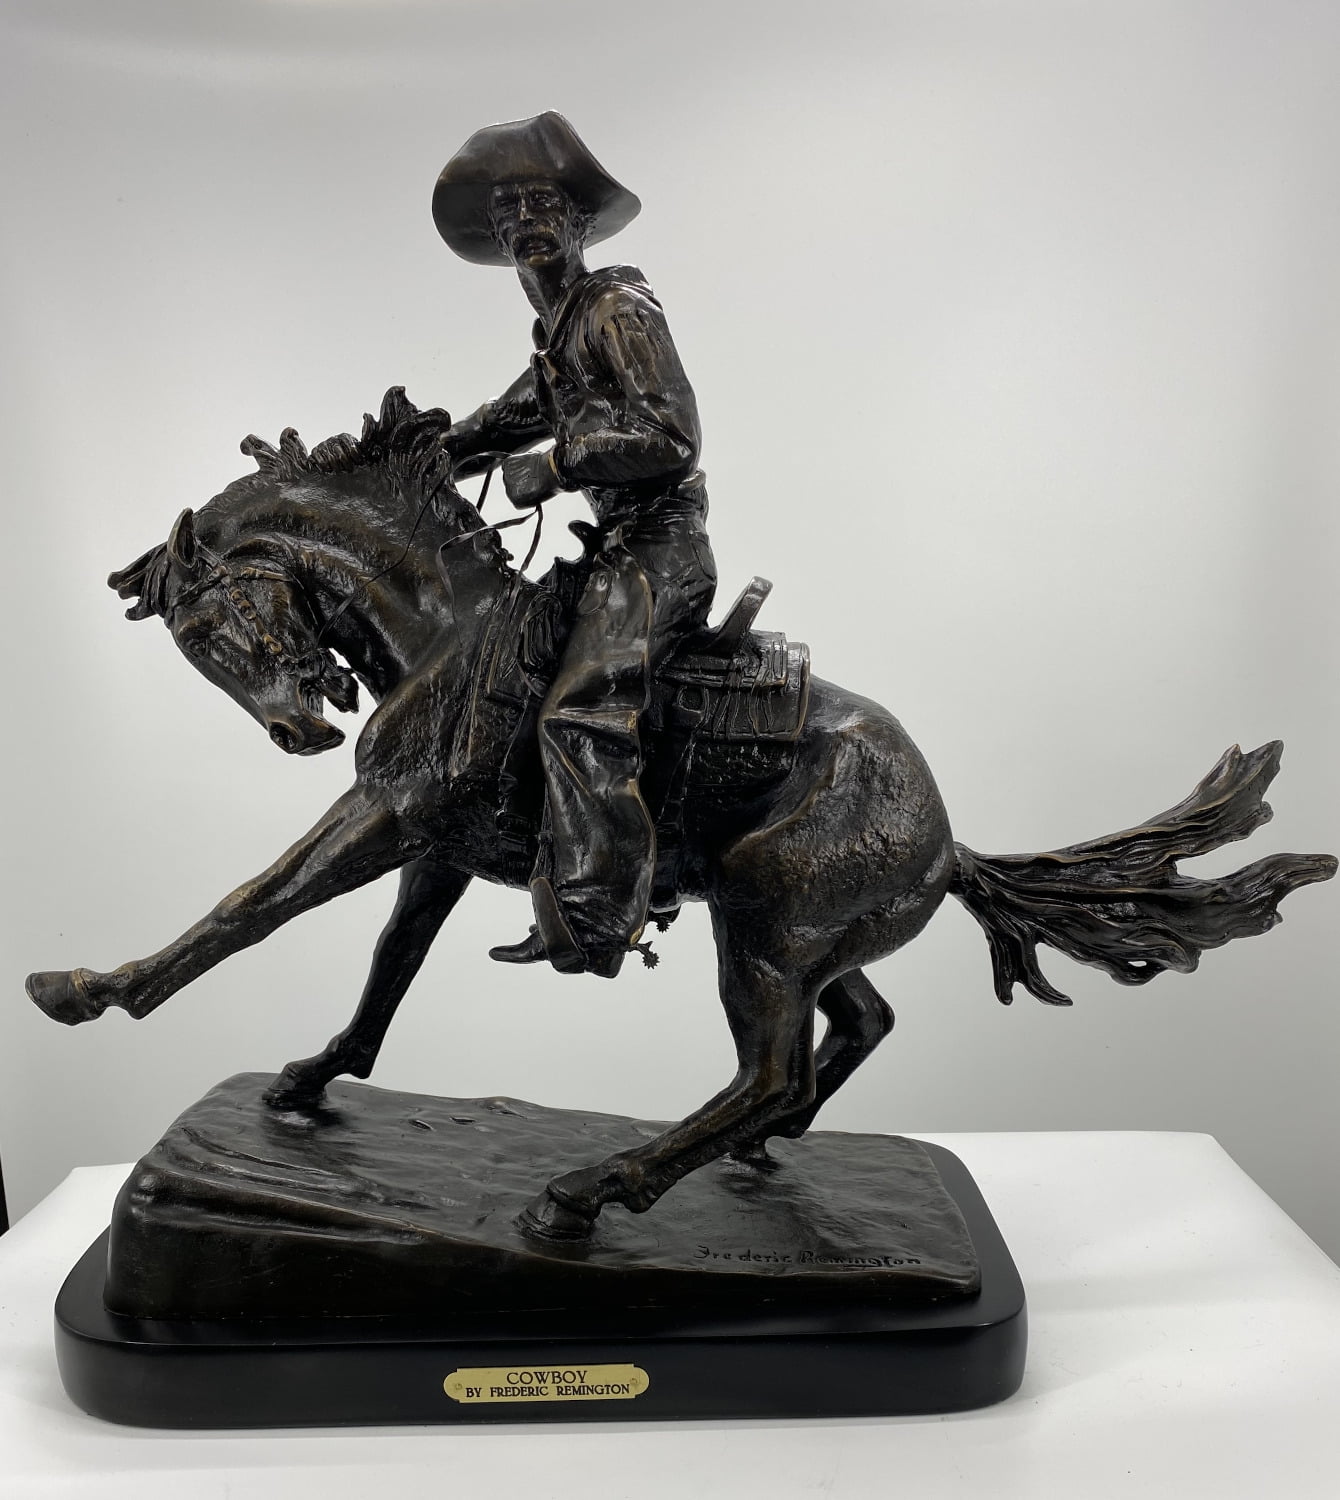 jul Rejse Bærecirkel COWBOY” American Bronze Handmade Sculpture by Frederic Remington mini size  9.75"H x 11.5"L x 5"W - Walmart.com